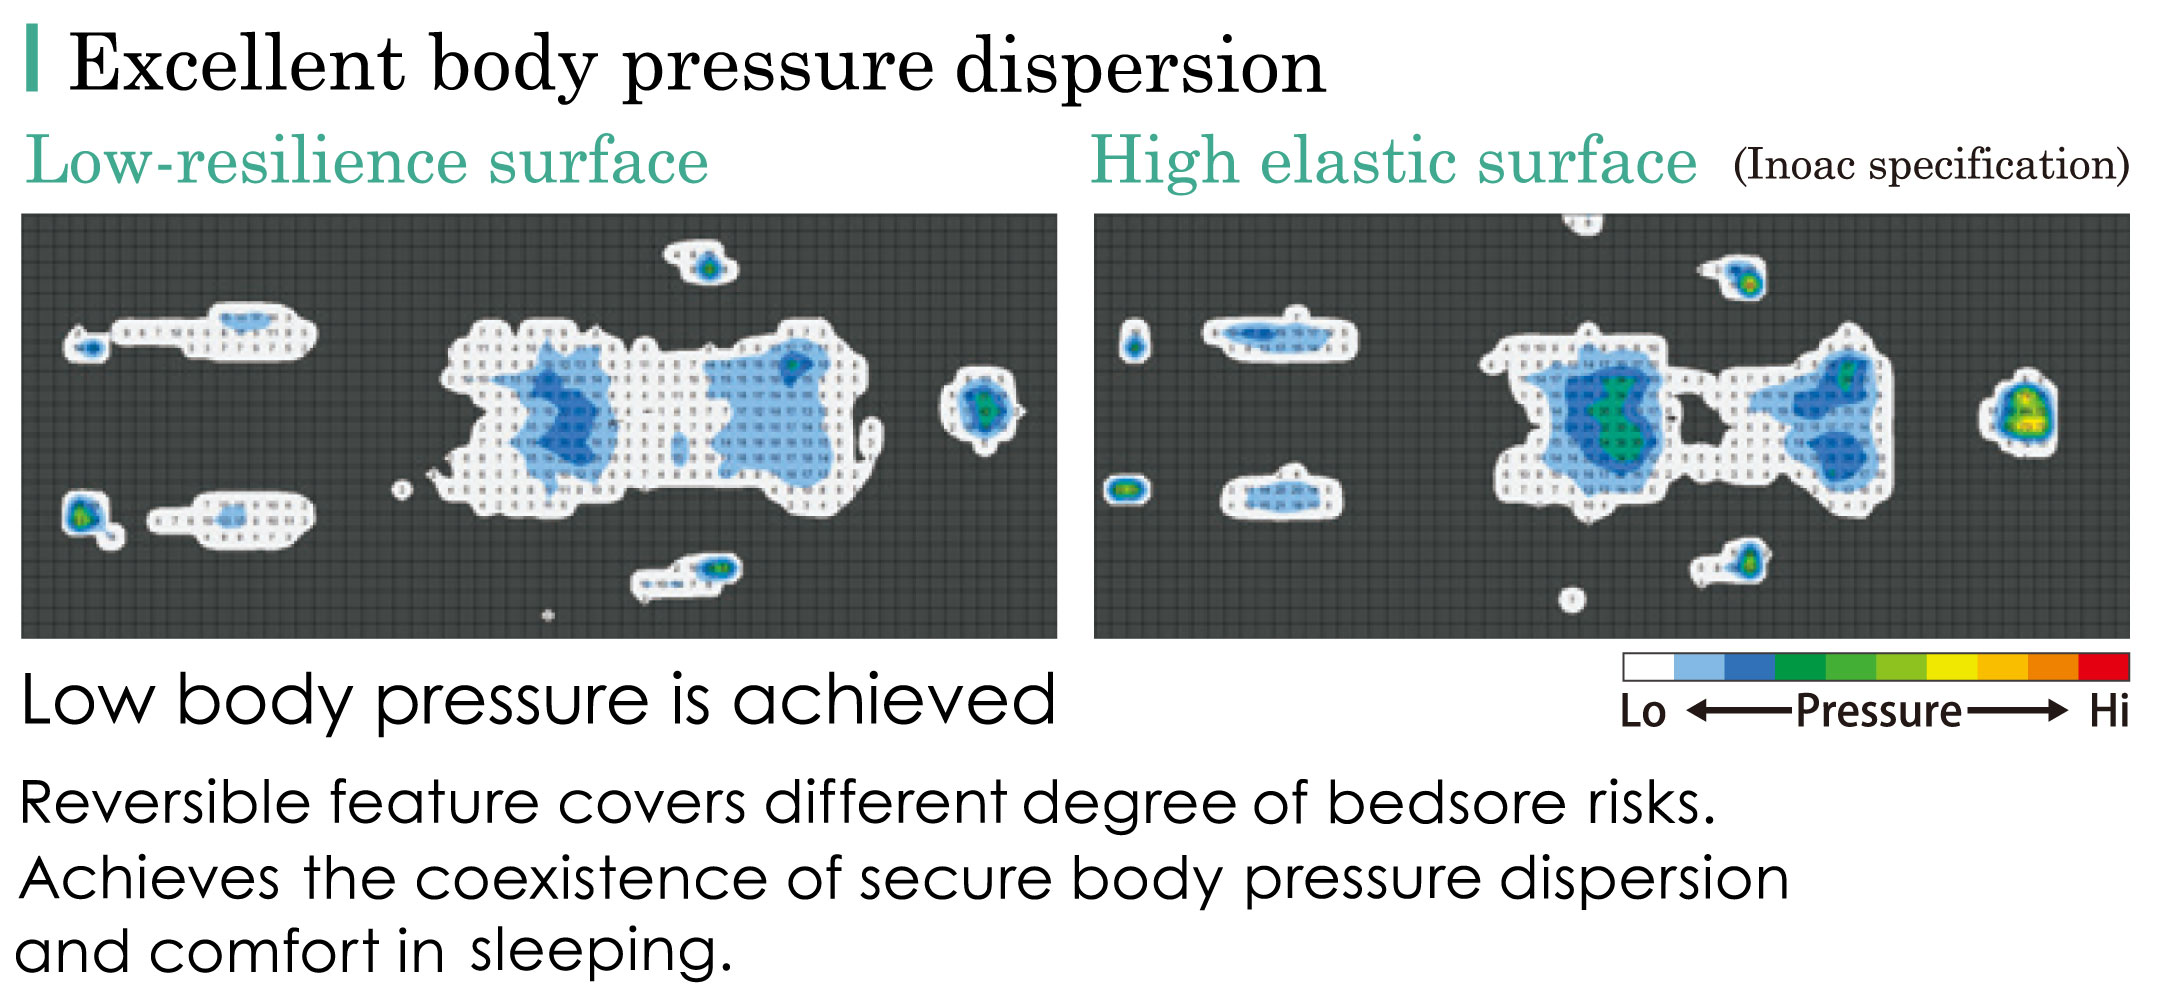 Excellent body pressure dispersion